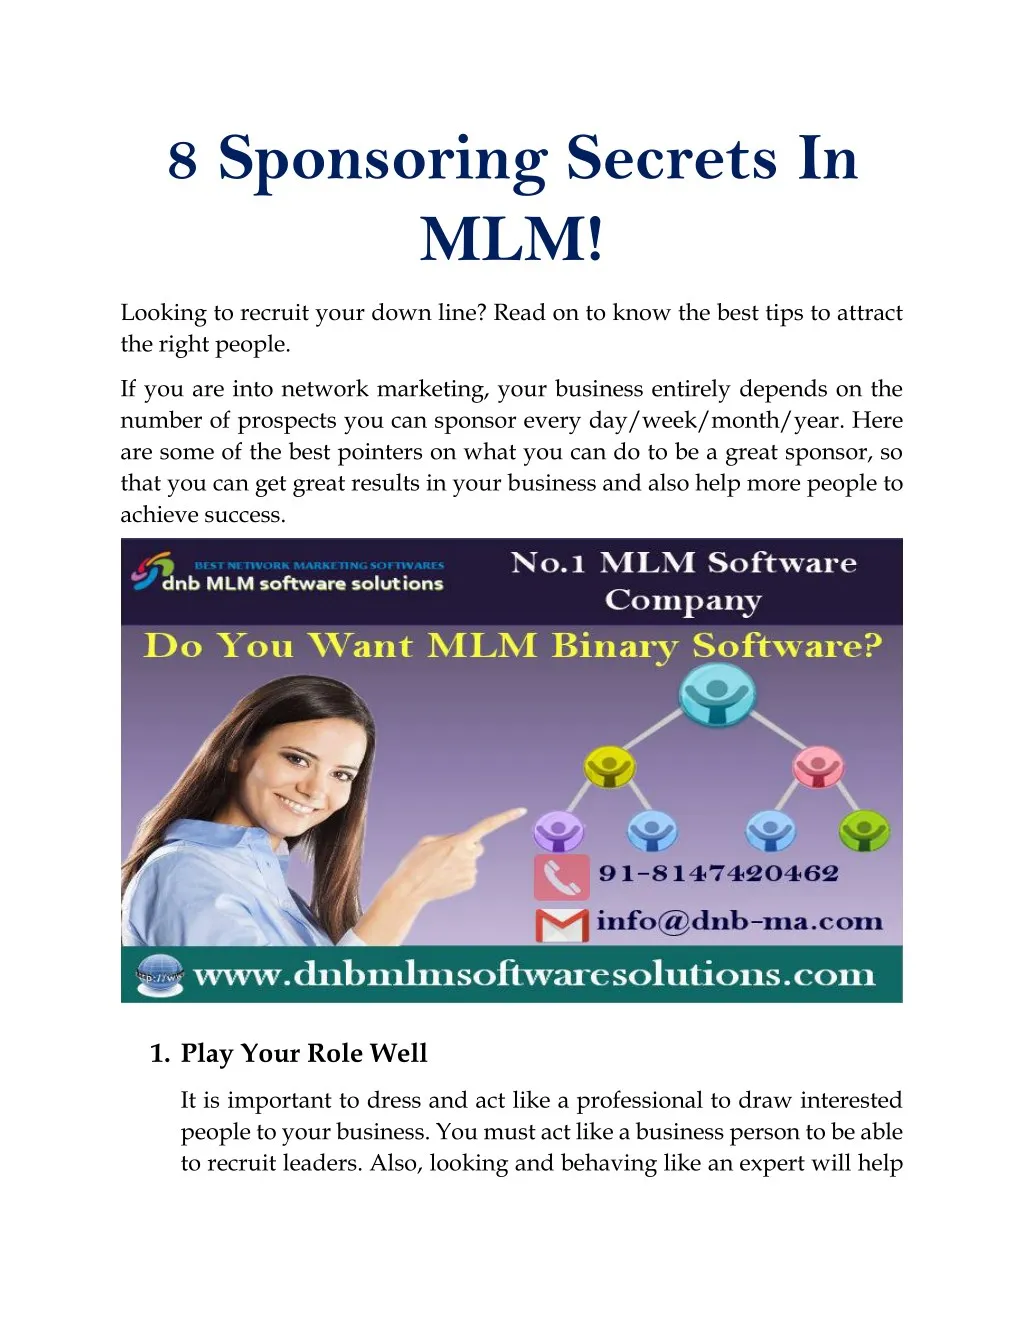 8 sponsoring secrets in mlm